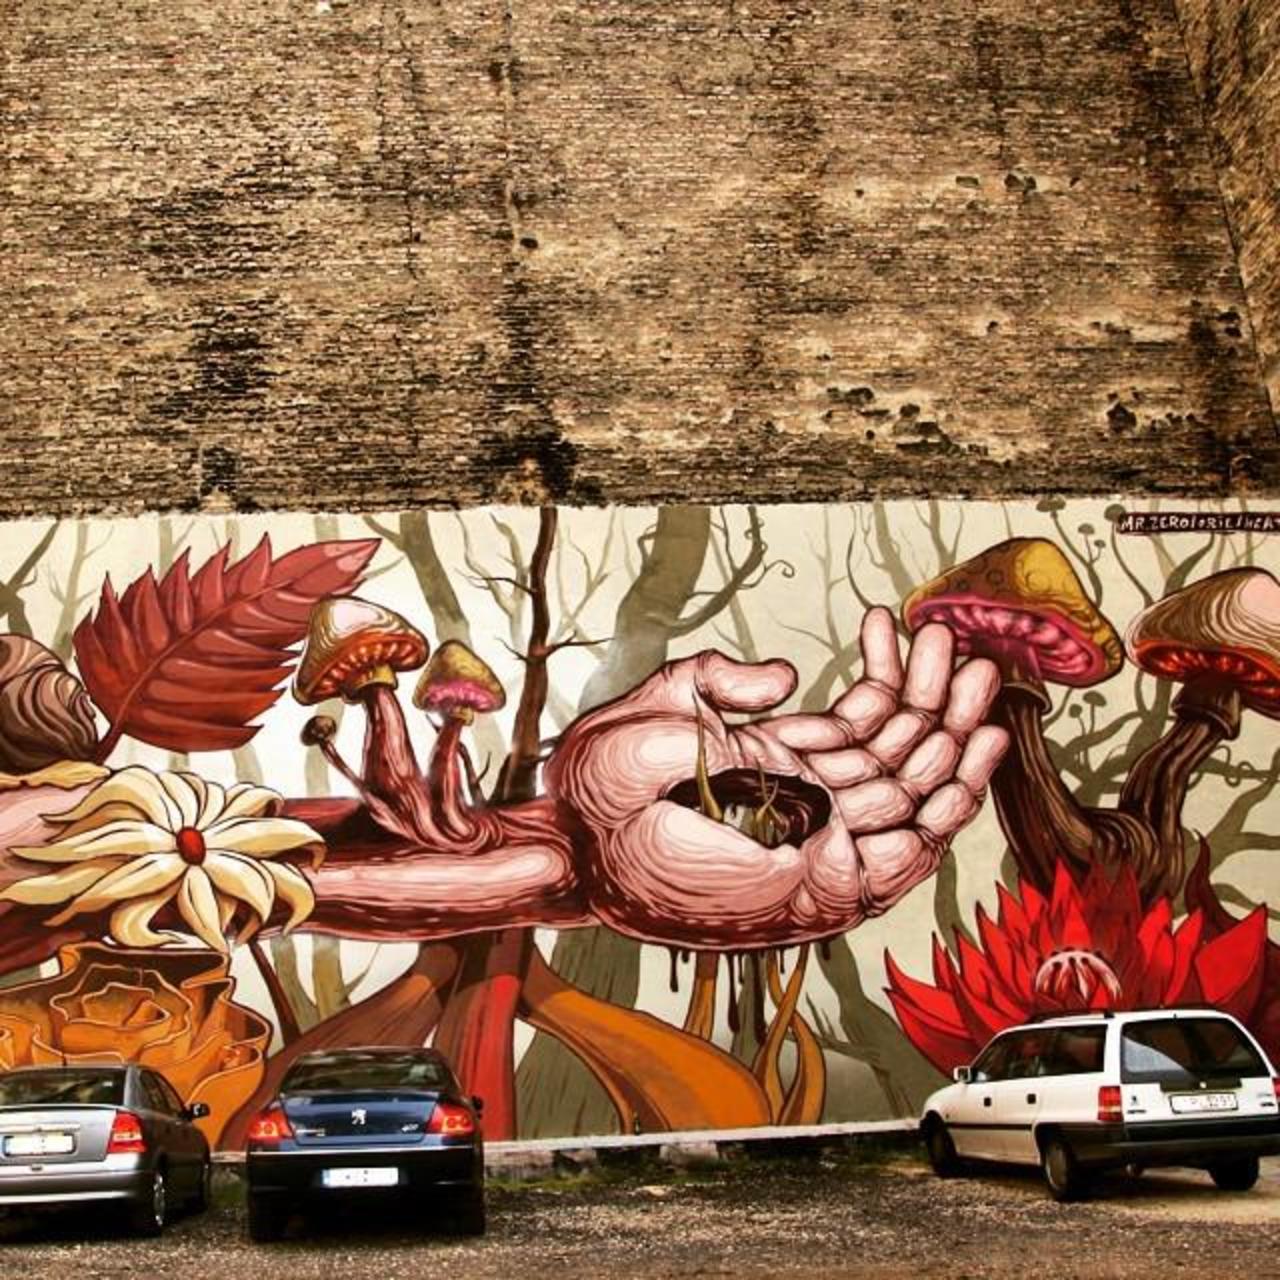 #budapest #thisisbudapest #welovebudapest #city #street #graffiti #streetart #paint #art #design #style #skyline #i… http://t.co/ycoswwJnRd